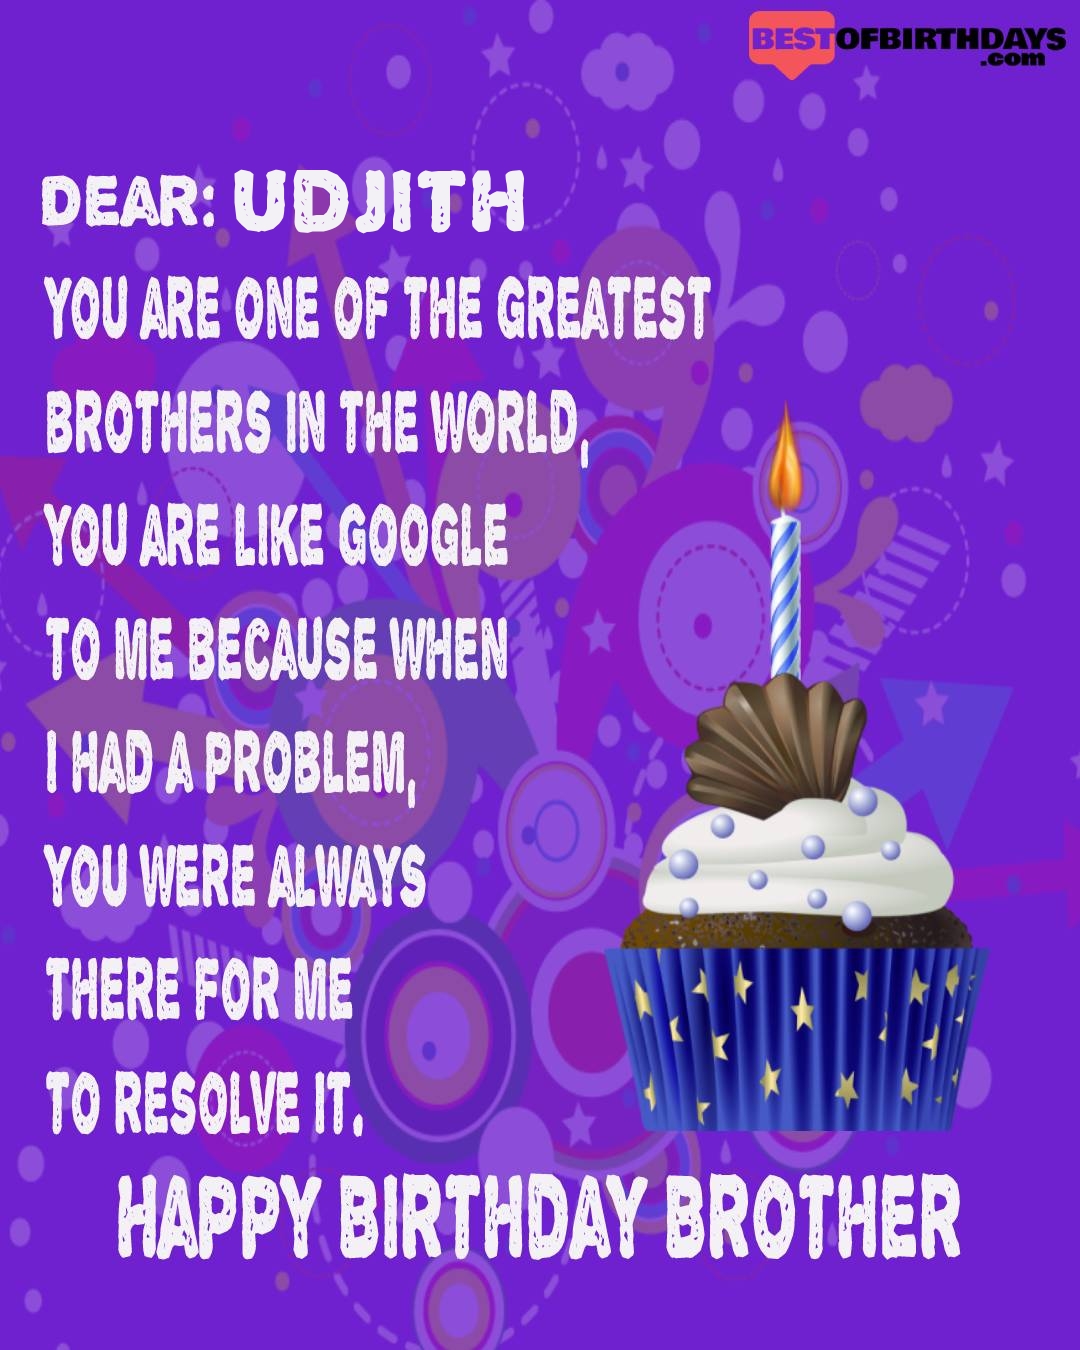 Happy birthday udjith bhai brother bro